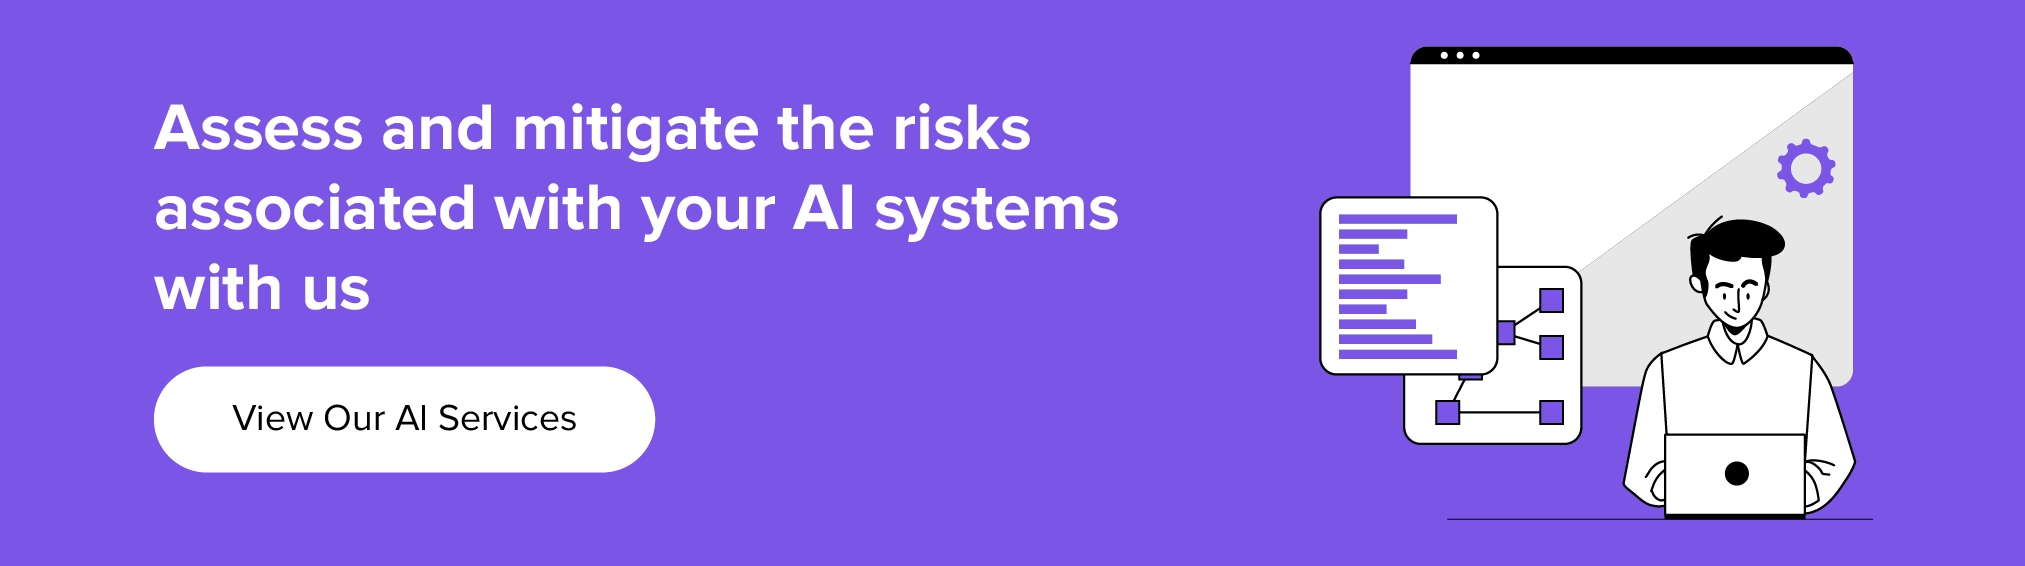 berkolaborasi dengan kami untuk menilai dan memitigasi risiko yang terkait dengan sistem AI Anda